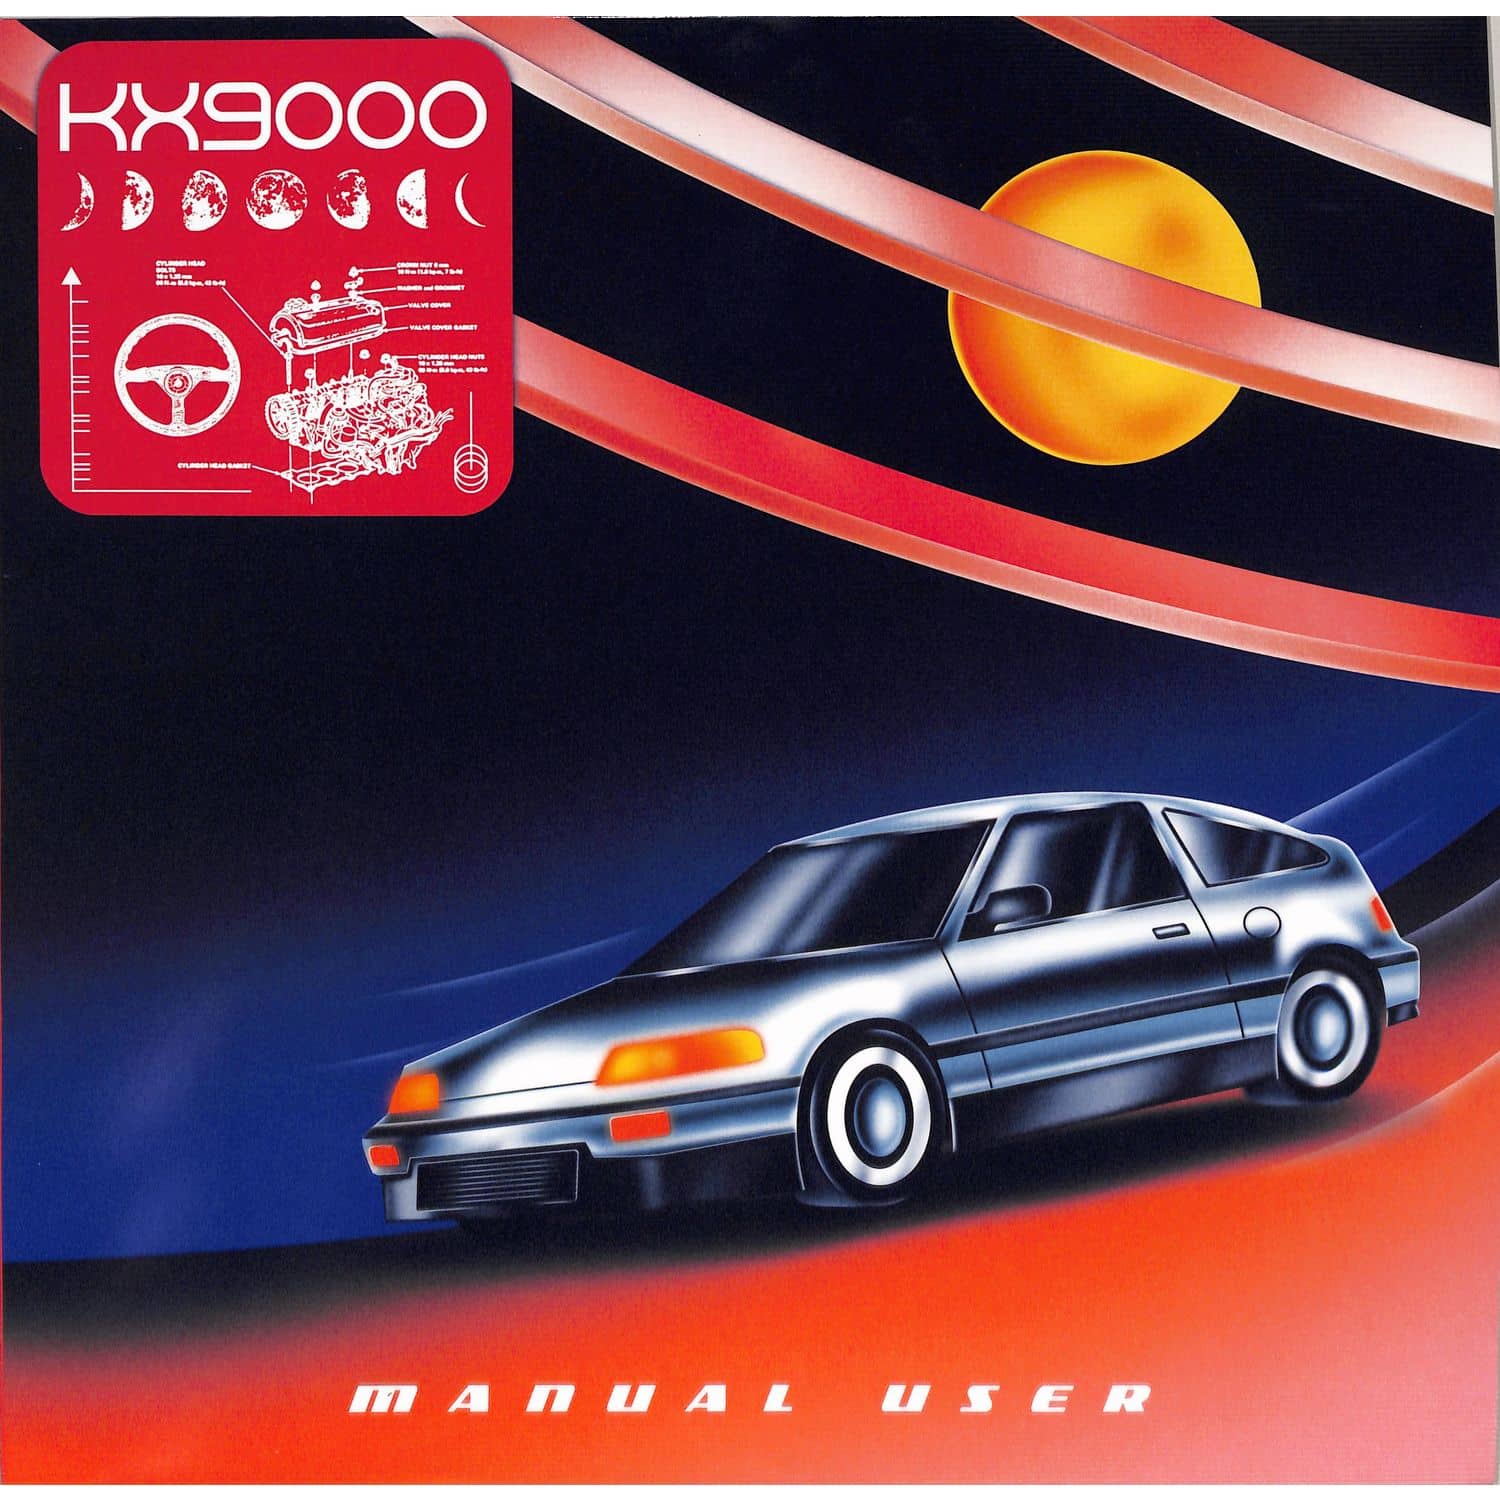 KX9000 - MANUAL USER